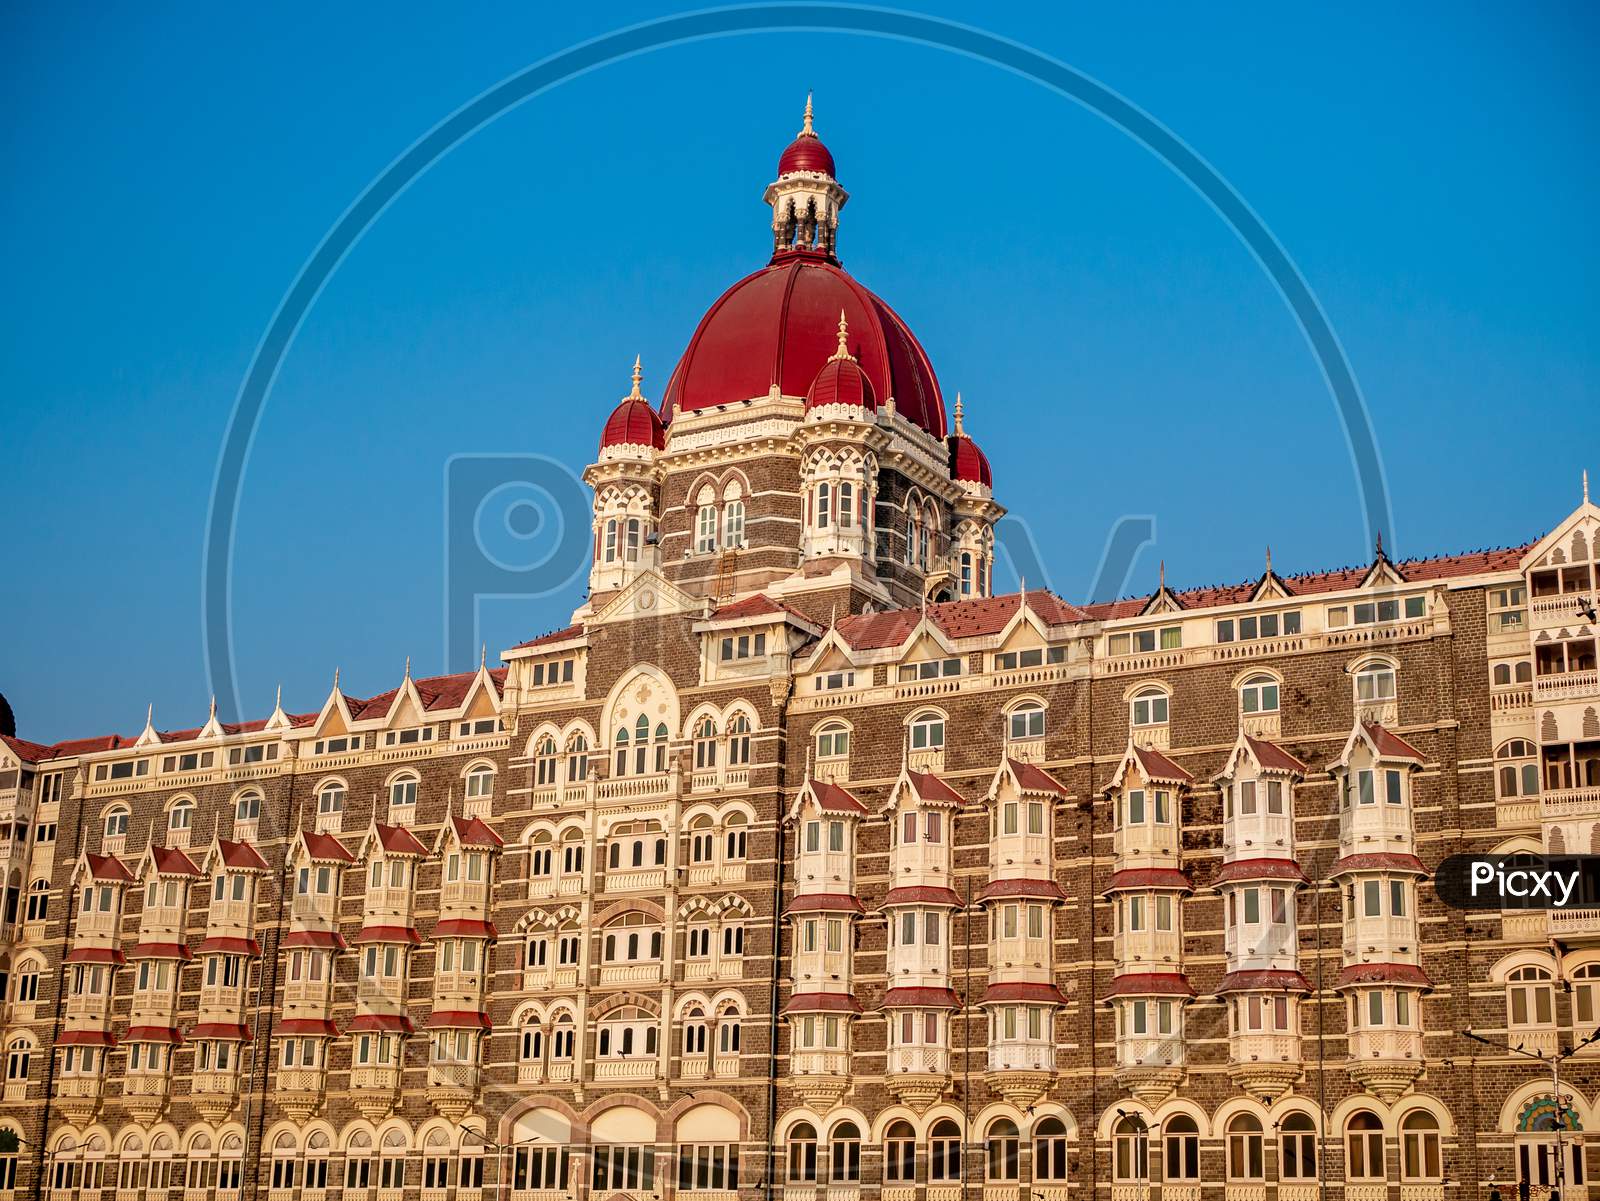 Heritage Grand Class Five-Star Hotel In The Colaba Region Of Mumbai, Maharashtra, India, Next To The Gateway Of India.